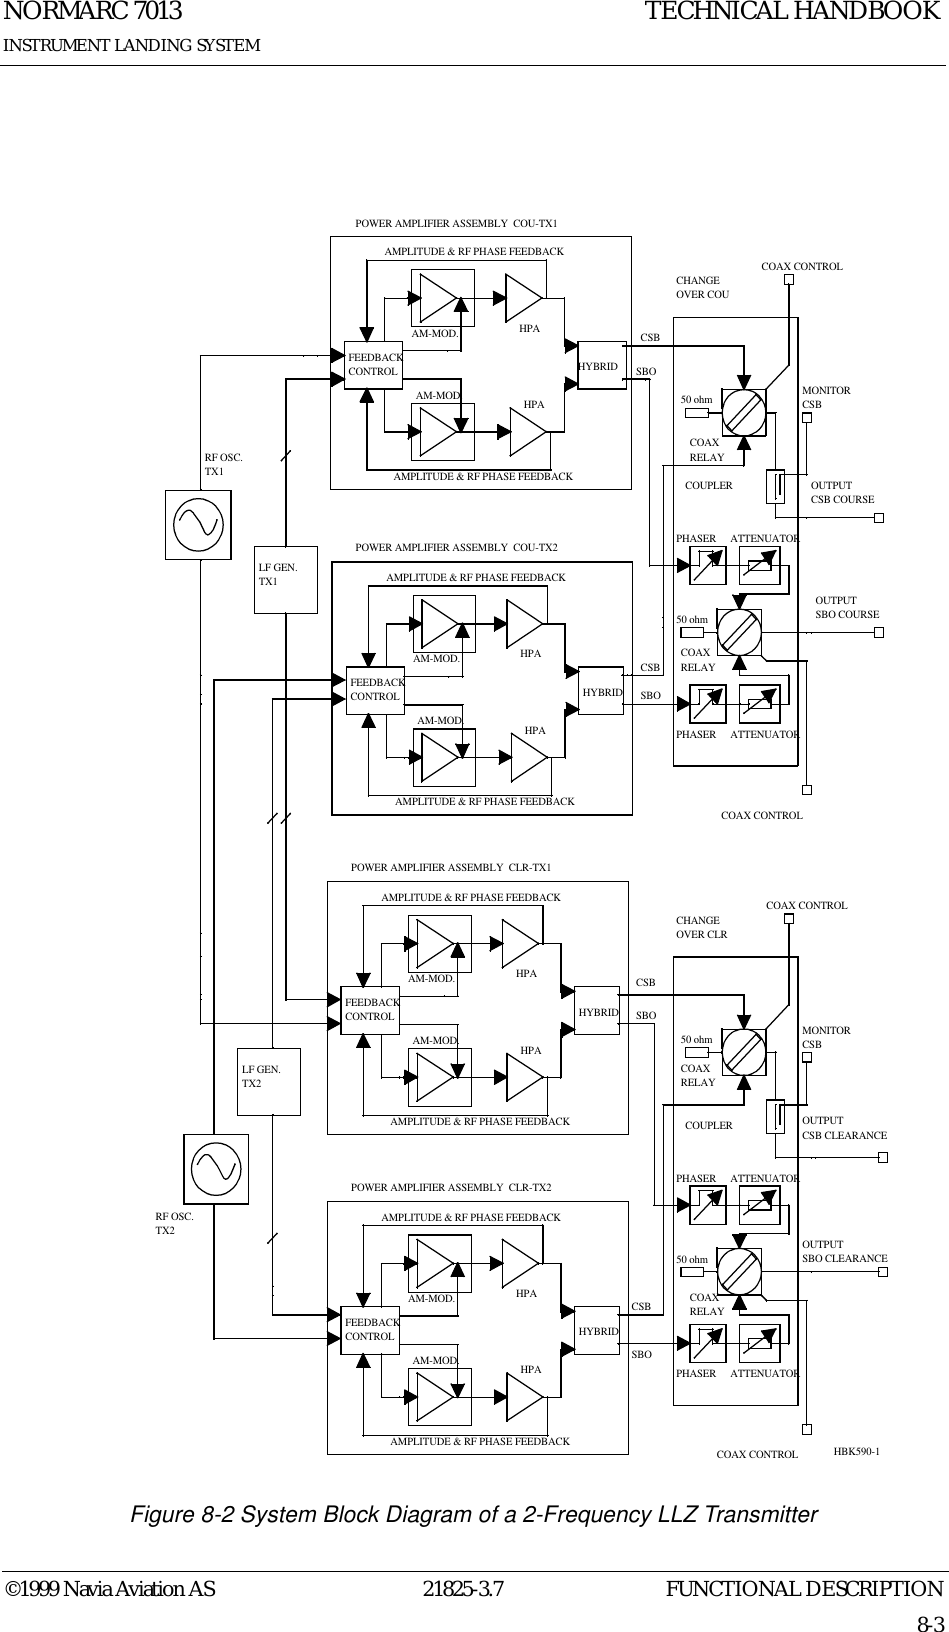 FUNCTIONAL DESCRIPTIONNORMARC 701321825-3.78-3©1999 Navia Aviation ASINSTRUMENT LANDING SYSTEMTECHNICAL HANDBOOK       Figure 8-2 System Block Diagram of a 2-Frequency LLZ TransmitterPHASER ATTENUATORPHASER ATTENUATORCOAXRELAYCOAXRELAYCSBCSBSBOSBOOUTPUTSBO COURSEOUTPUTCSB COURSEMONITORCSBCOUPLERCOAX CONTROLCOAX CONTROLPHASER ATTENUATORPHASER ATTENUATORCOAXRELAYCOAXRELAYOUTPUTSBO CLEARANCEOUTPUTCSB CLEARANCEMONITORCSBCOUPLERCOAX CONTROLCOAX CONTROLRF OSC.TX2RF OSC.TX1LF GEN.TX1LF GEN.TX2CHANGEOVER COUCHANGEOVER CLRCSBSBOCSBSBO POWER AMPLIFIER ASSEMBLY  COU-TX2 POWER AMPLIFIER ASSEMBLY  COU-TX1 POWER AMPLIFIER ASSEMBLY  CLR-TX1 POWER AMPLIFIER ASSEMBLY  CLR-TX2AMPLITUDE &amp; RF PHASE FEEDBACKAM-MOD. HPAHPAHYBRIDFEEDBACKCONTROLAM-MOD.AMPLITUDE &amp; RF PHASE FEEDBACKAMPLITUDE &amp; RF PHASE FEEDBACKAM-MOD. HPAHPAHYBRIDFEEDBACKCONTROLAM-MOD.AMPLITUDE &amp; RF PHASE FEEDBACKAMPLITUDE &amp; RF PHASE FEEDBACKAM-MOD. HPAHPAHYBRIDFEEDBACKCONTROLAM-MOD.AMPLITUDE &amp; RF PHASE FEEDBACKAMPLITUDE &amp; RF PHASE FEEDBACKAM-MOD. HPAHPAHYBRIDFEEDBACKCONTROLAM-MOD.AMPLITUDE &amp; RF PHASE FEEDBACK50 ohm50 ohm50 ohm50 ohmHBK590-1